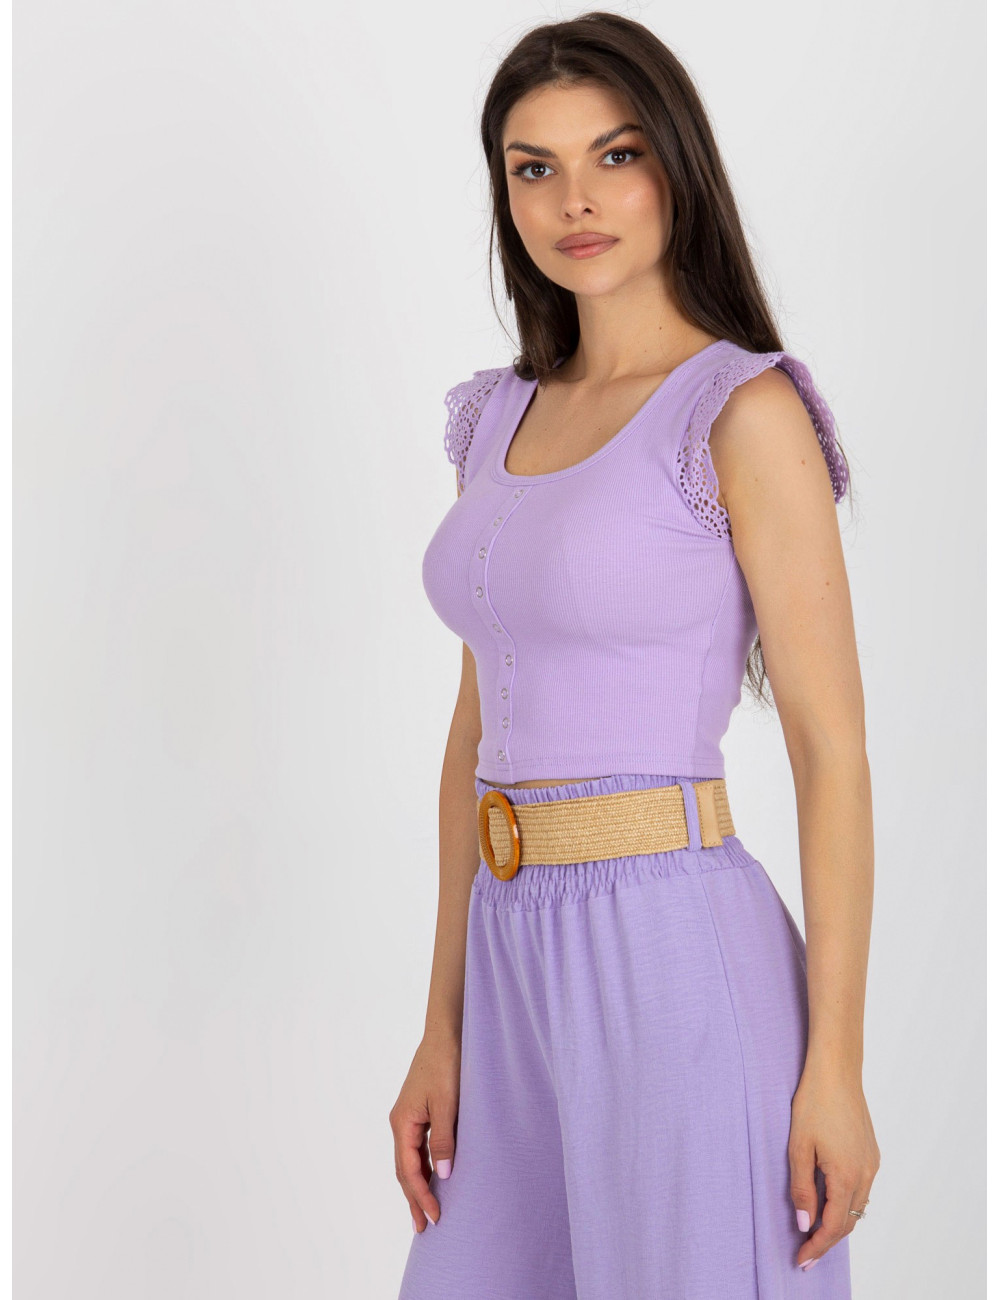 Light purple short blouse with stripe lace 